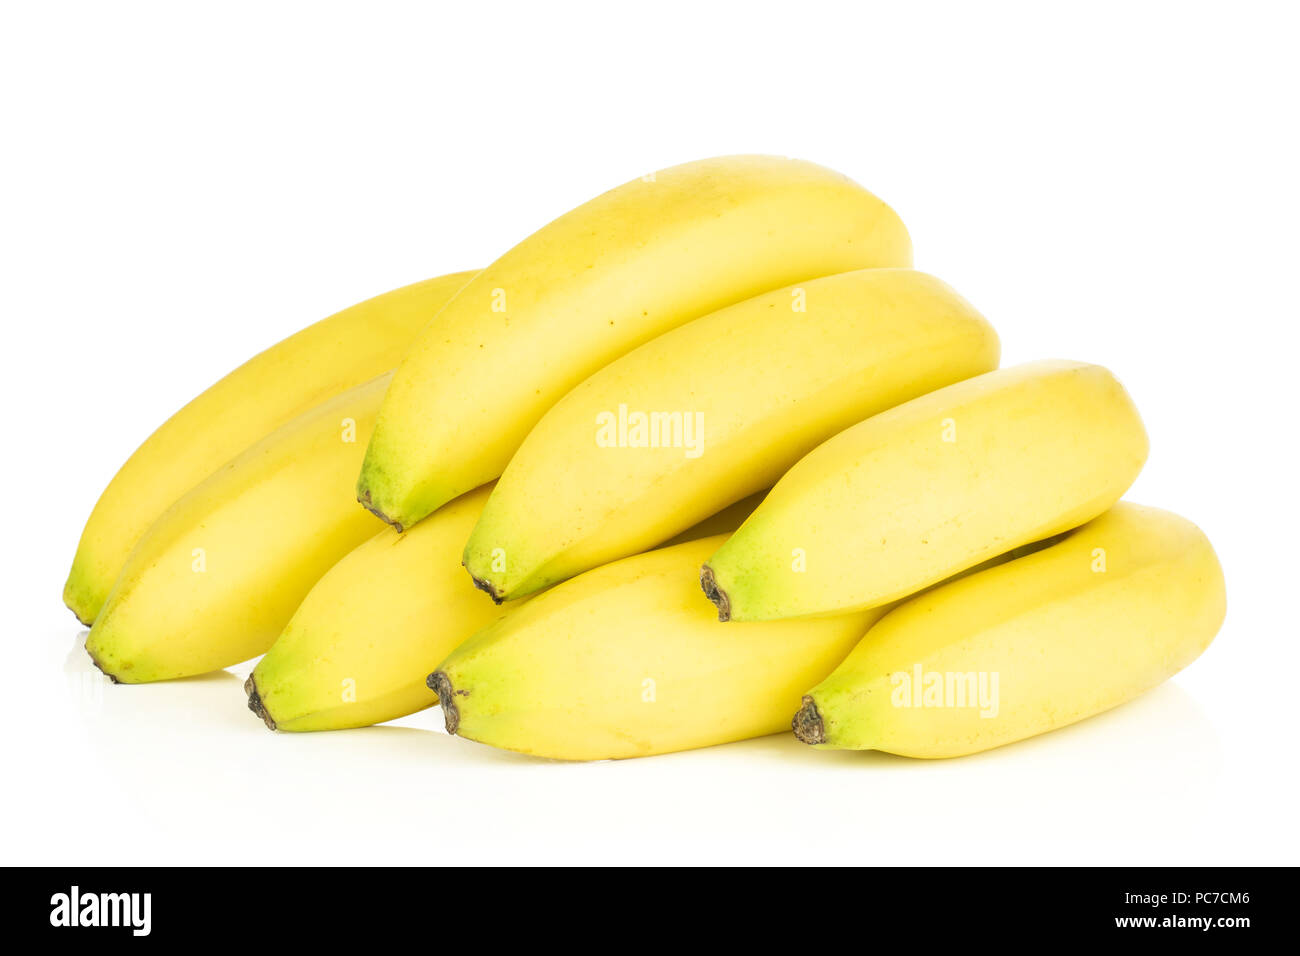 Group of eight whole fresh yellow banana isolated on white background Stock Photo